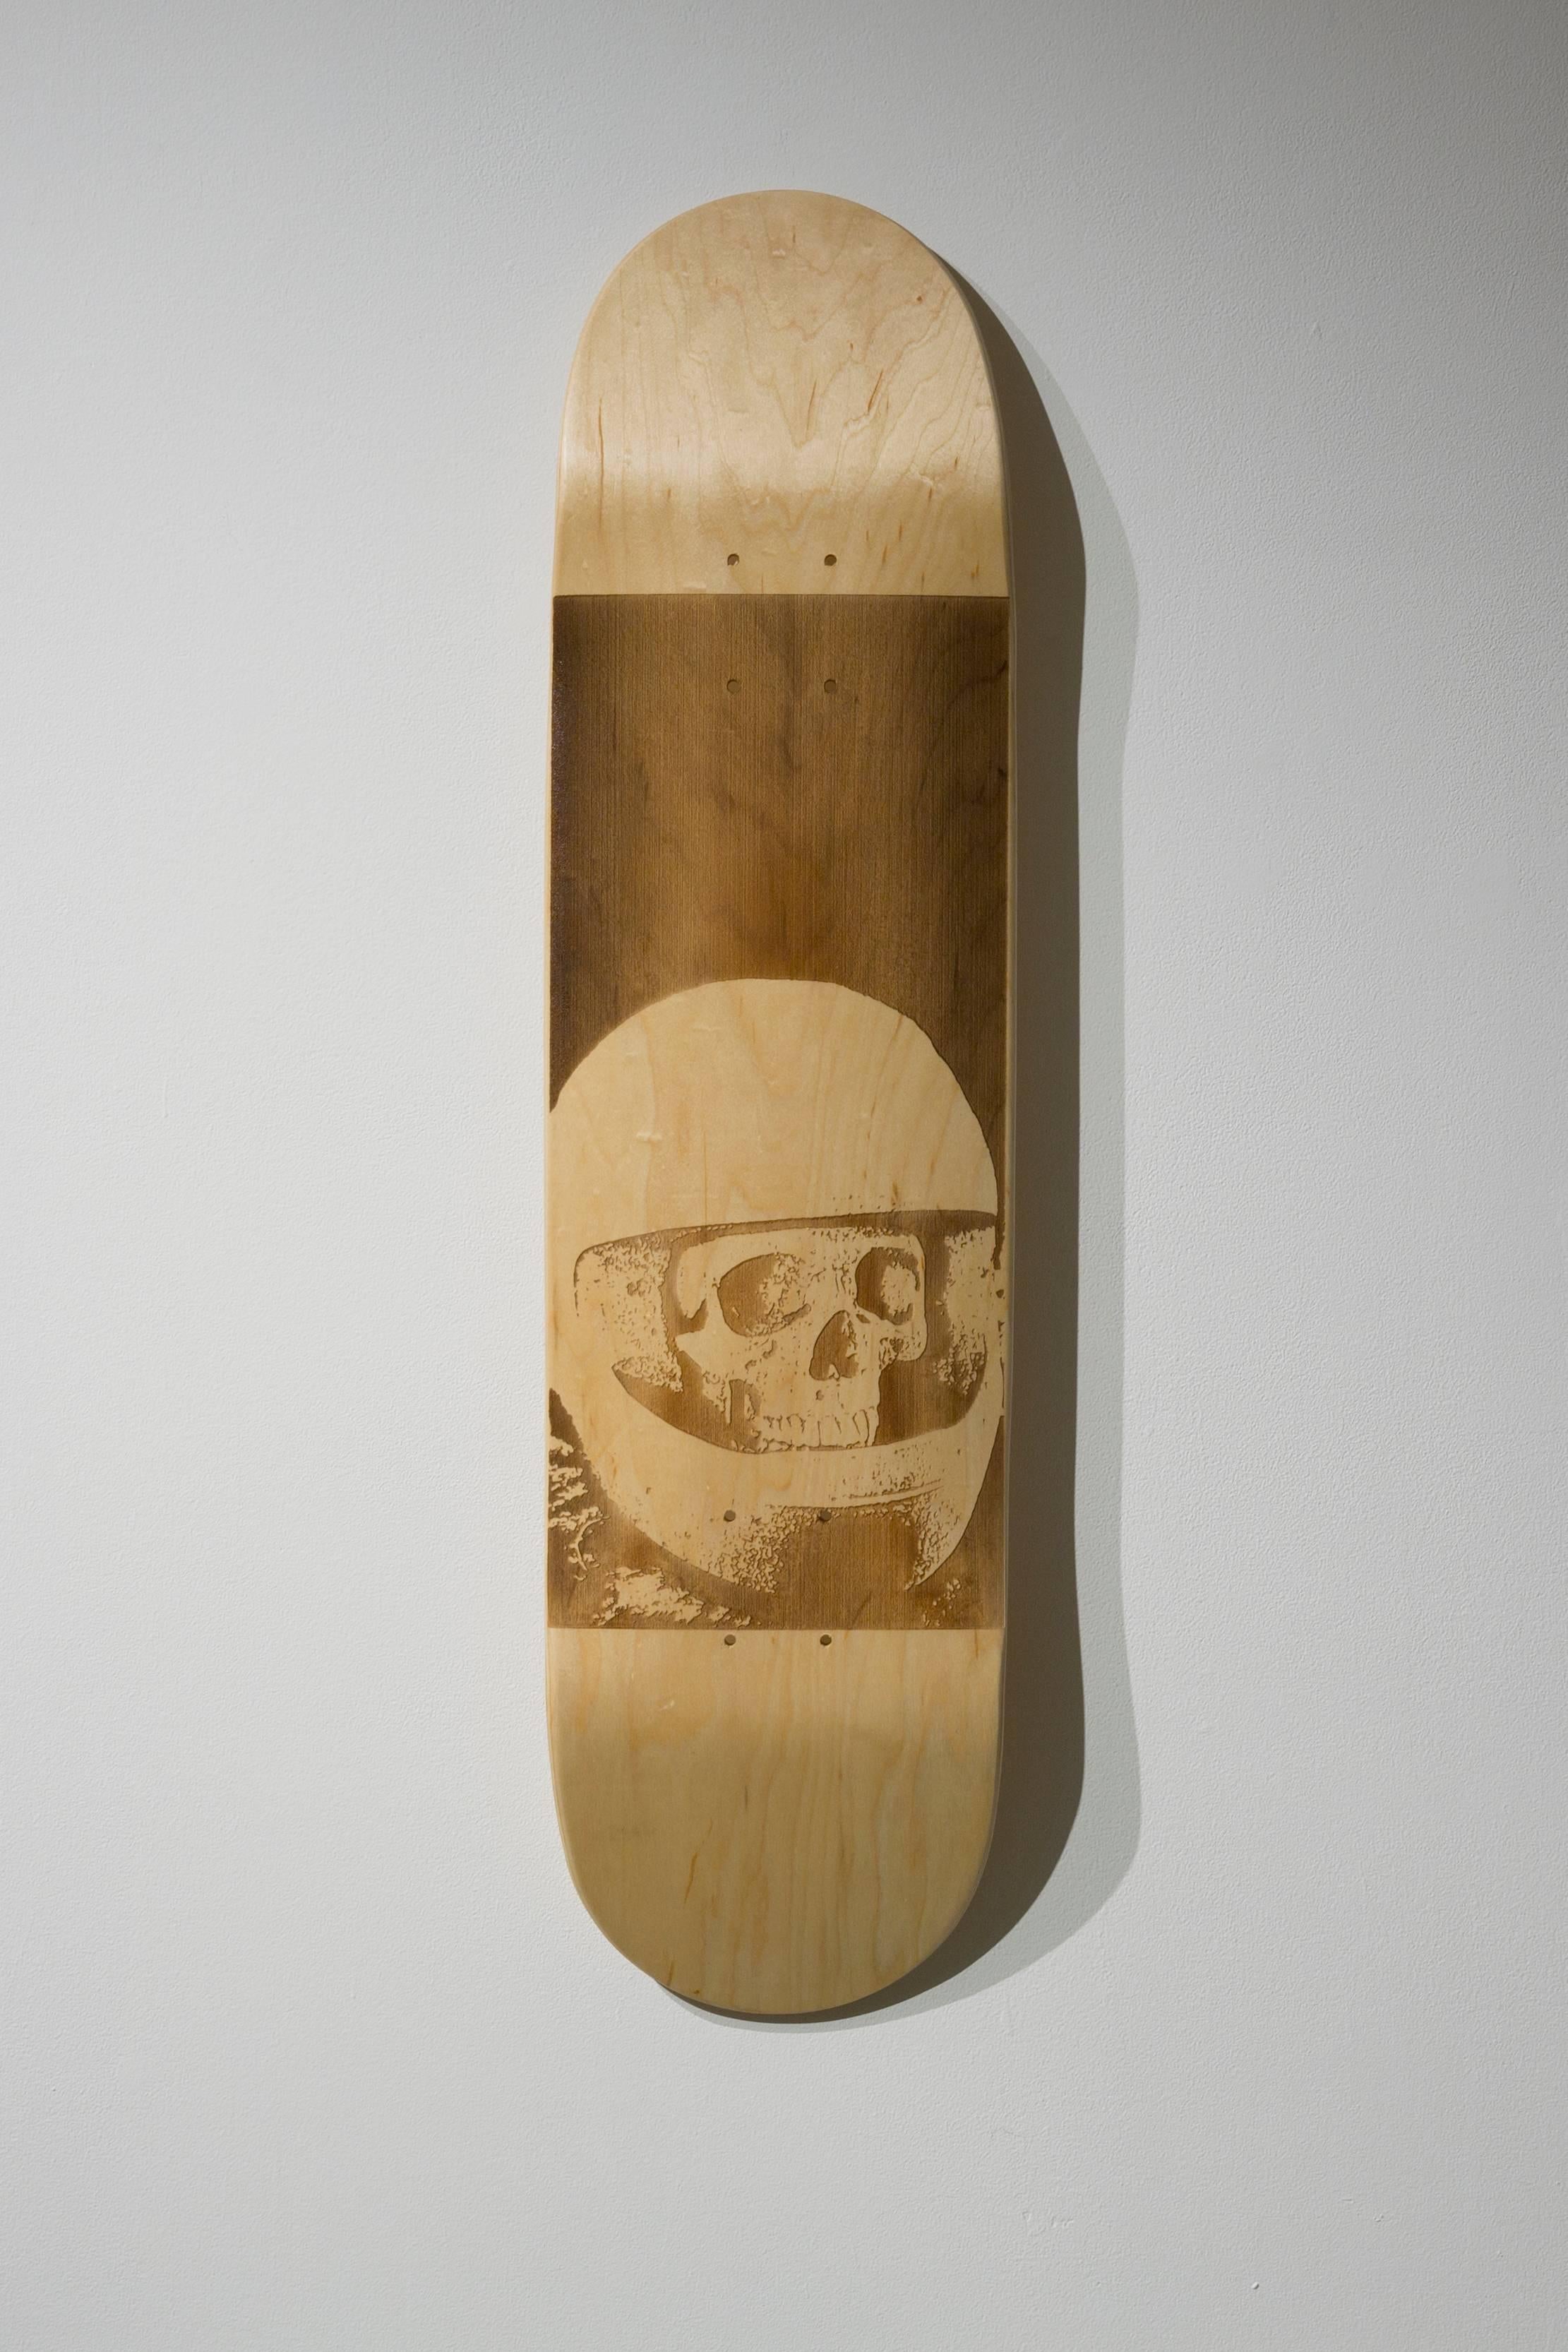 Brandon Vickerd Figurative Sculpture - Ghost Rider from the series Skateboard Deck